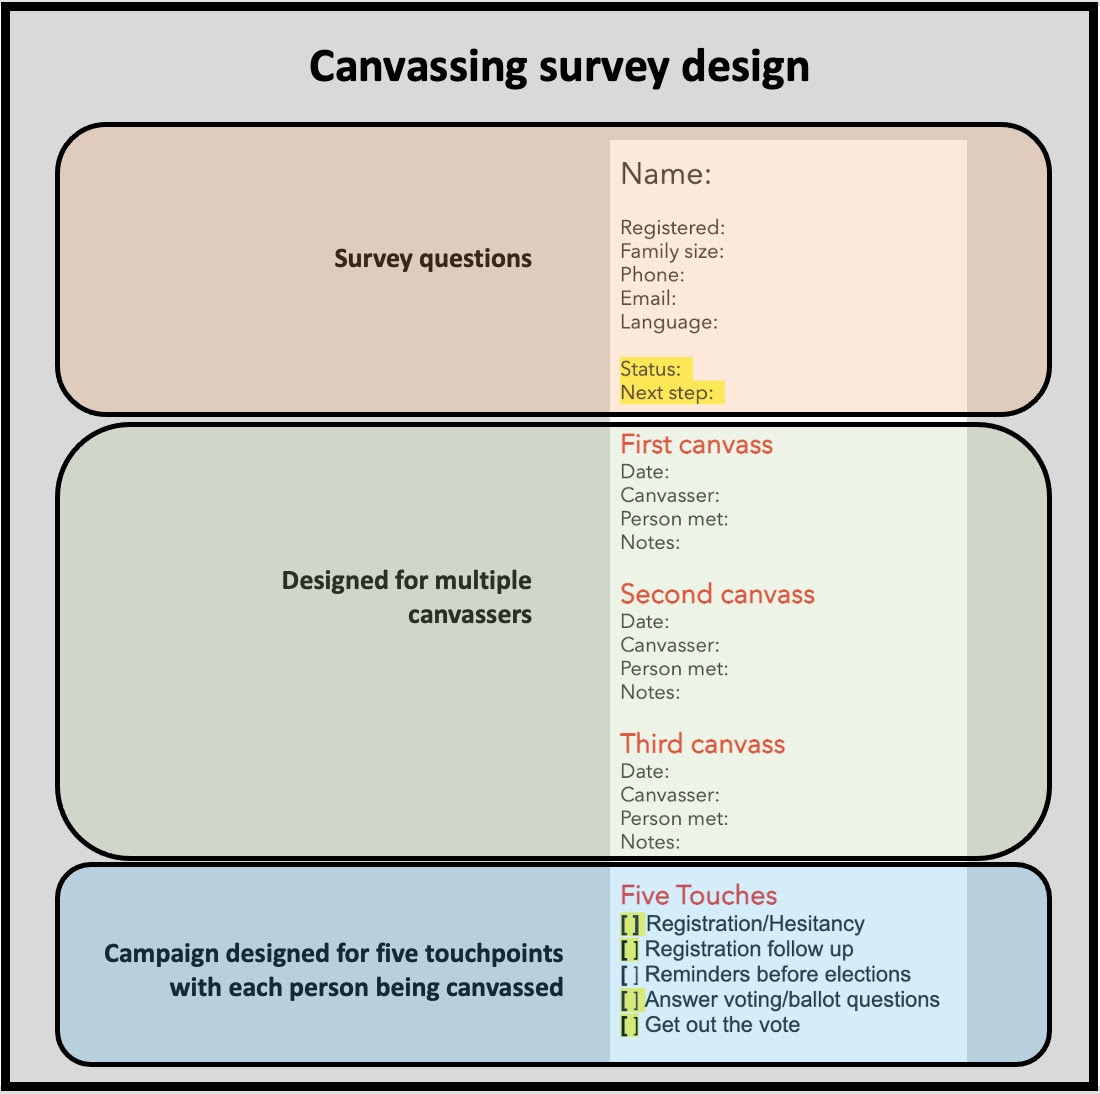 Canvassing survey design